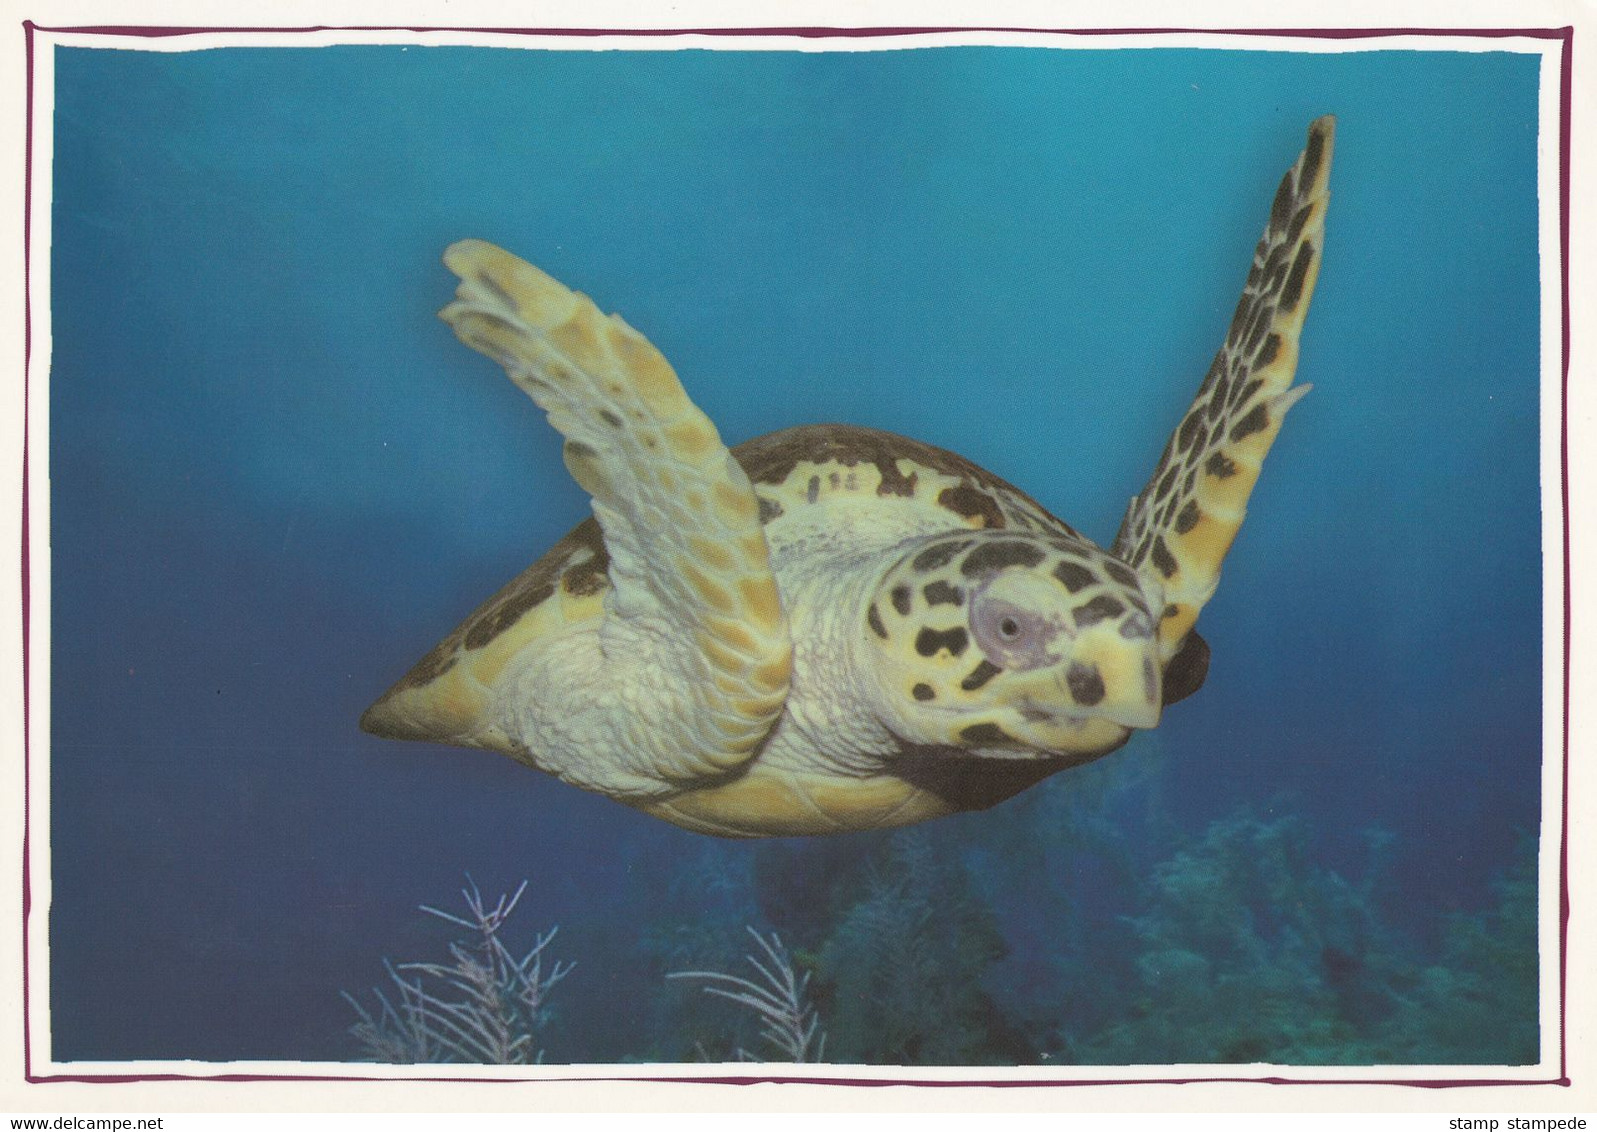 Qatar 2003 Environment Day Ras Laffan Industrial City Commemorative Postcard - Turtle Marine Life Fauna Animal Kingdom - Qatar